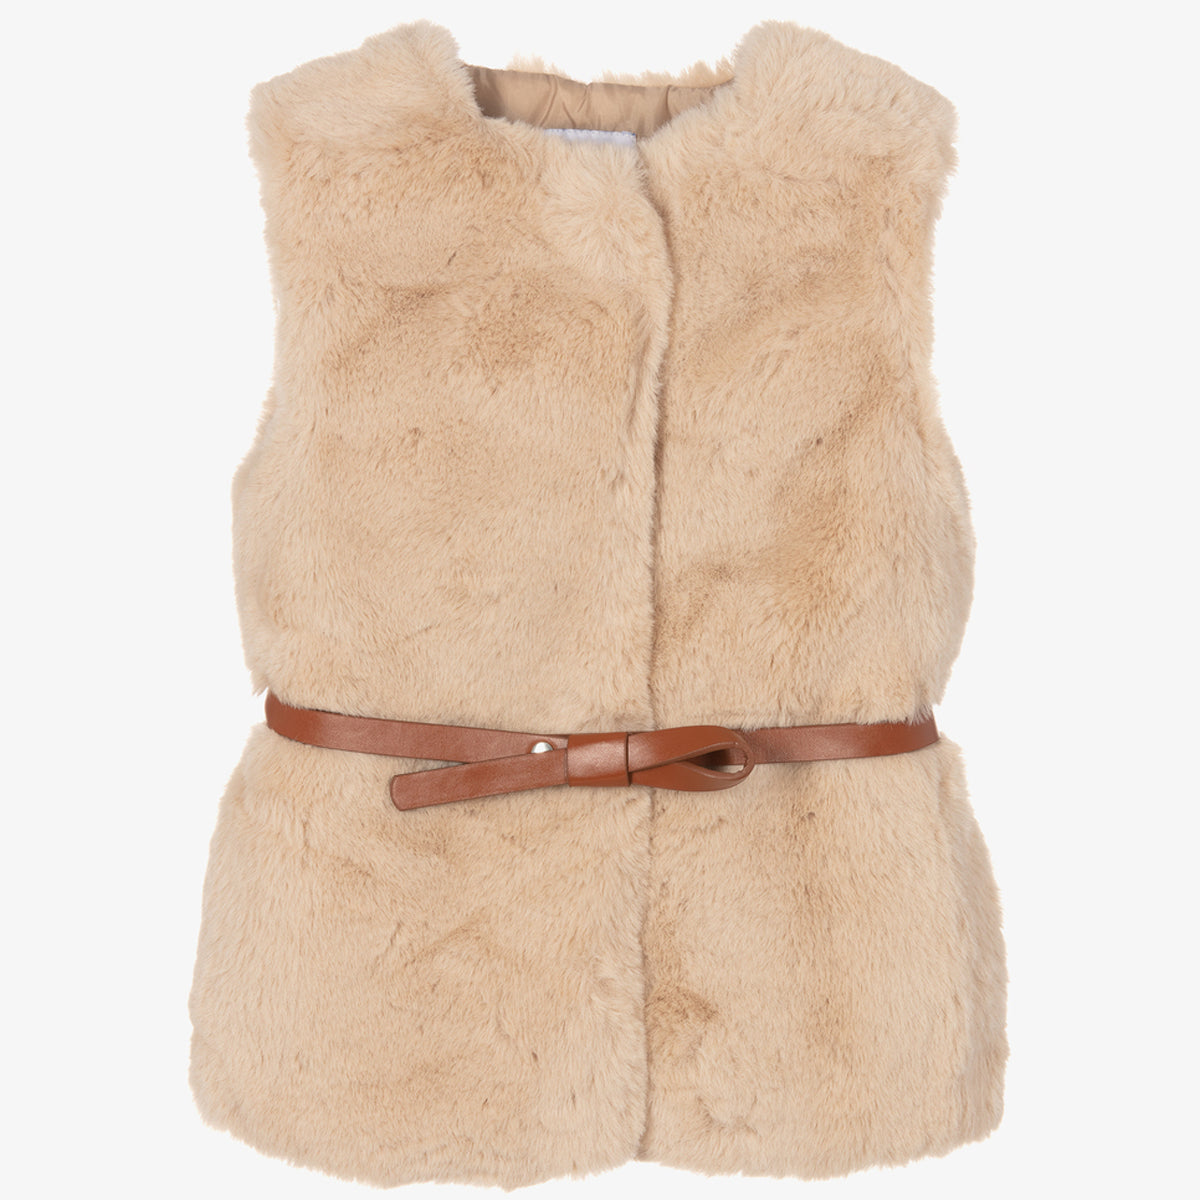 Beige Fur Vest with Belt